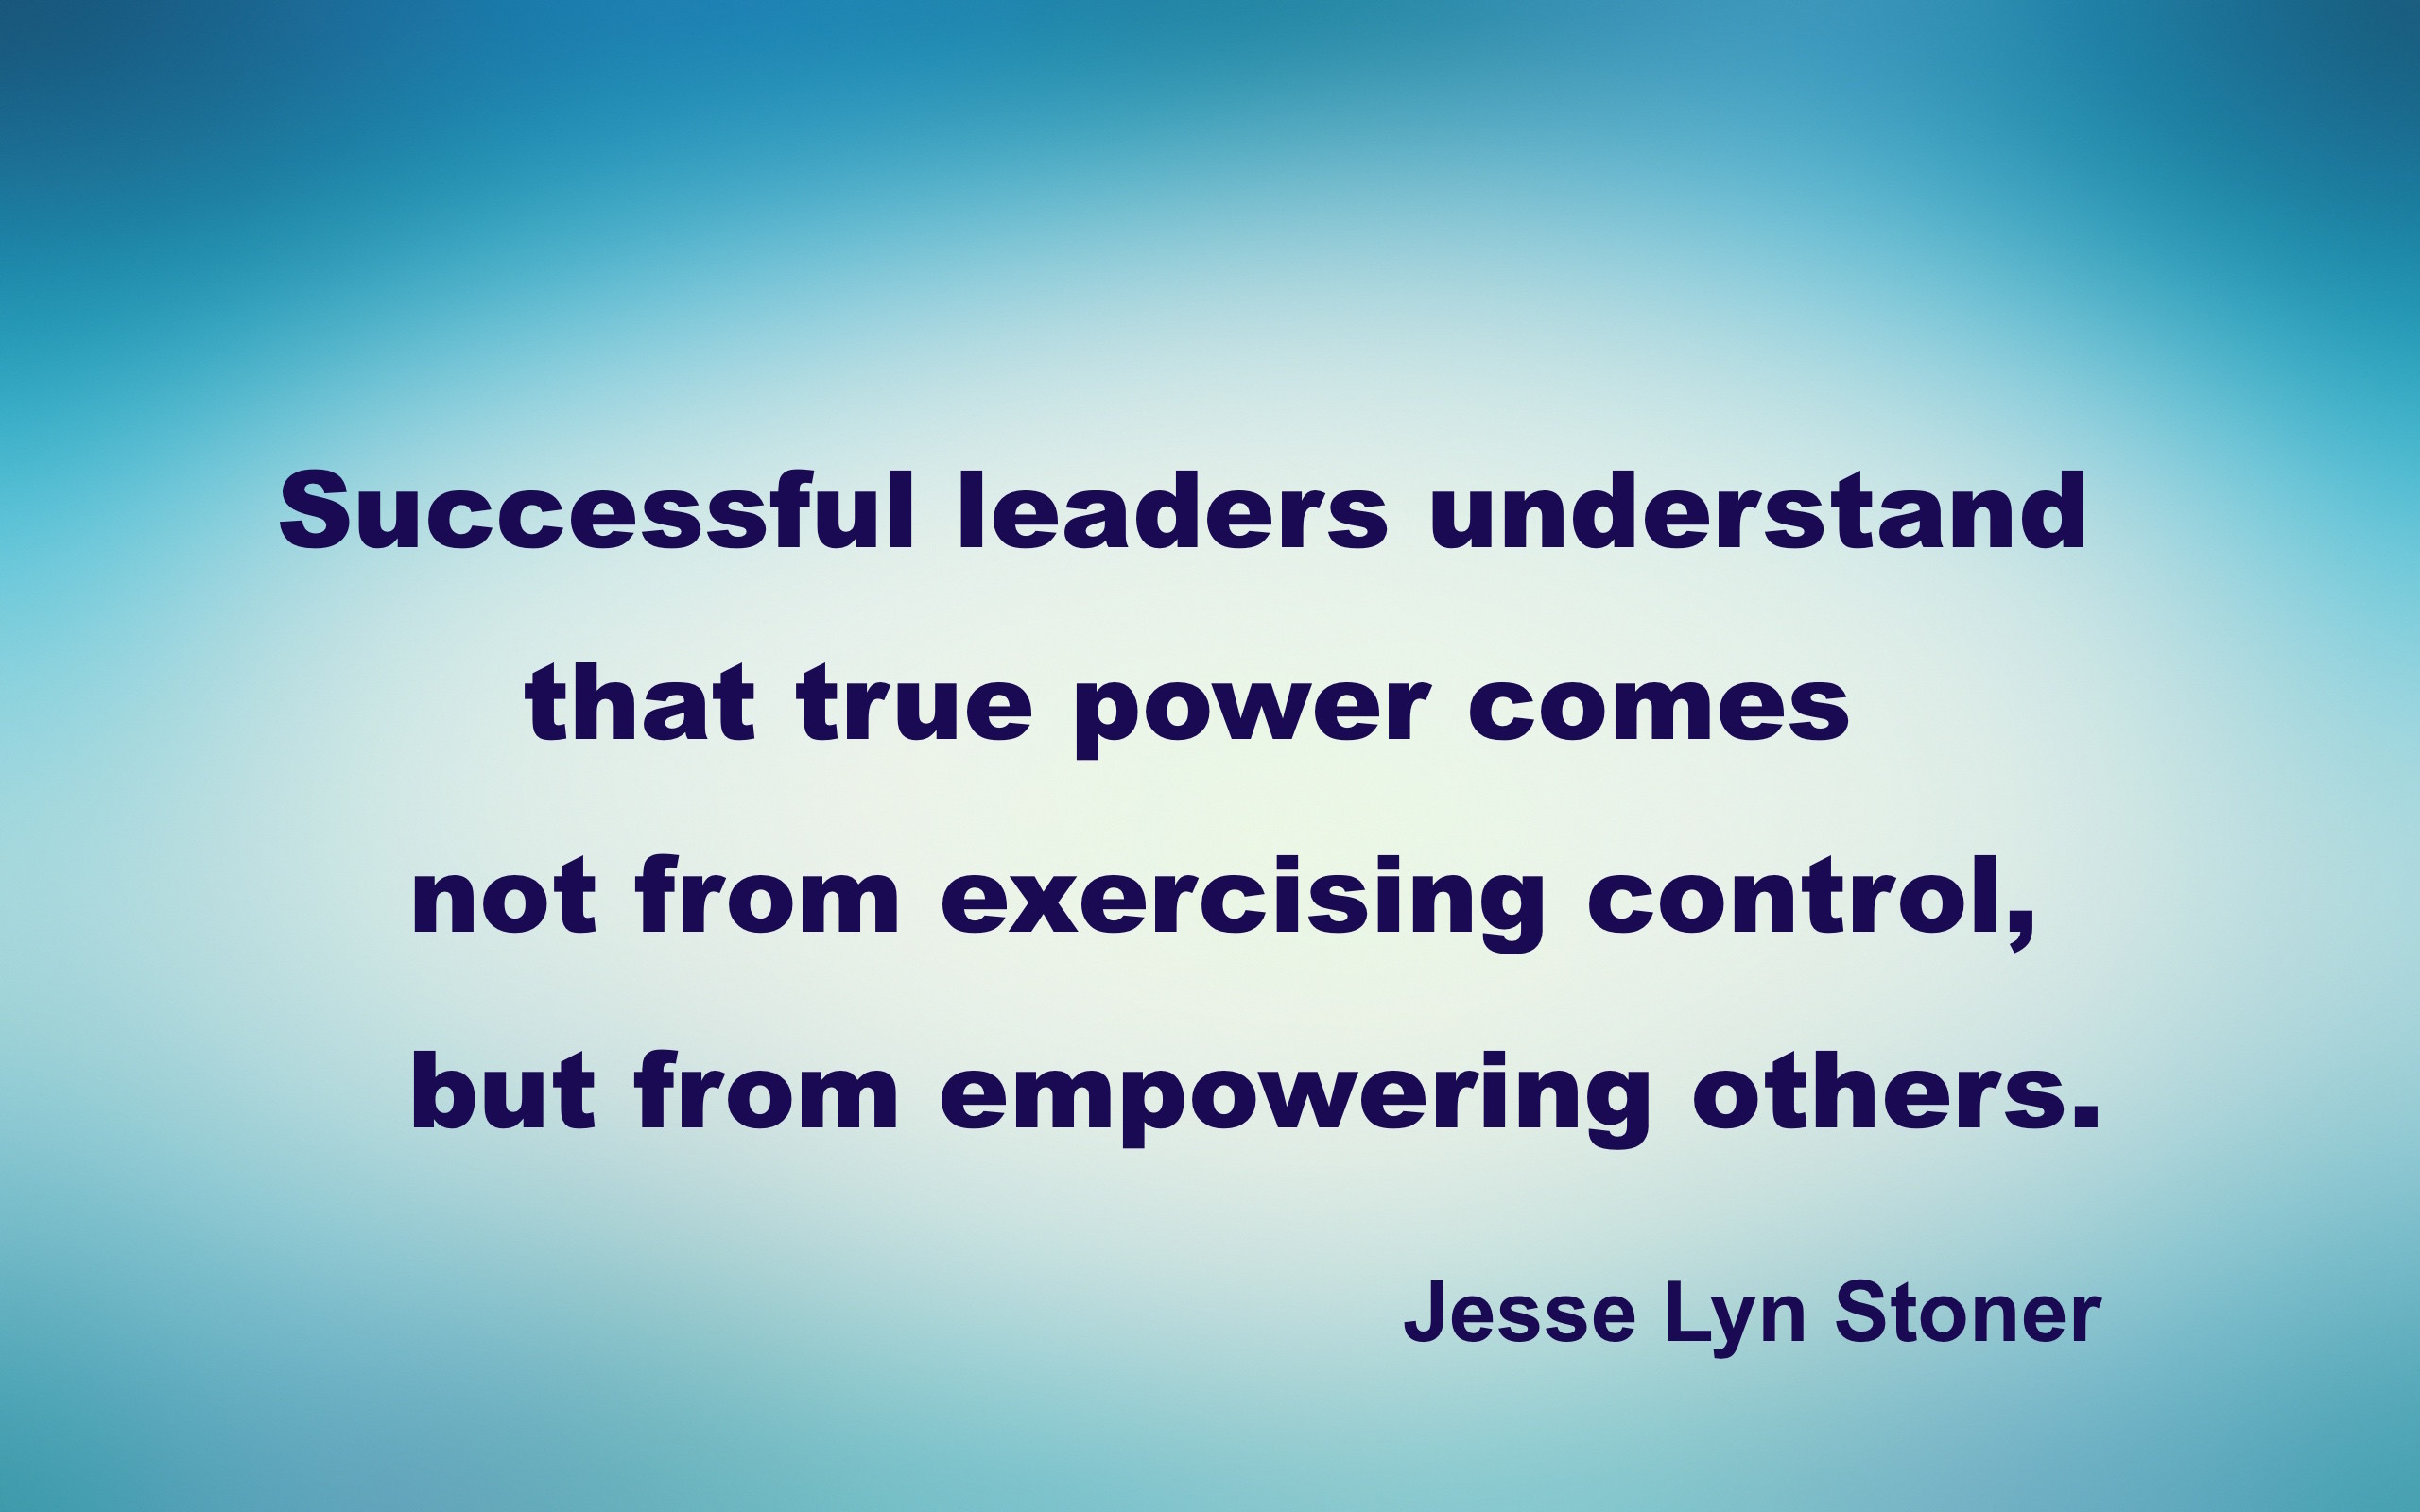 successful leaders understand true power